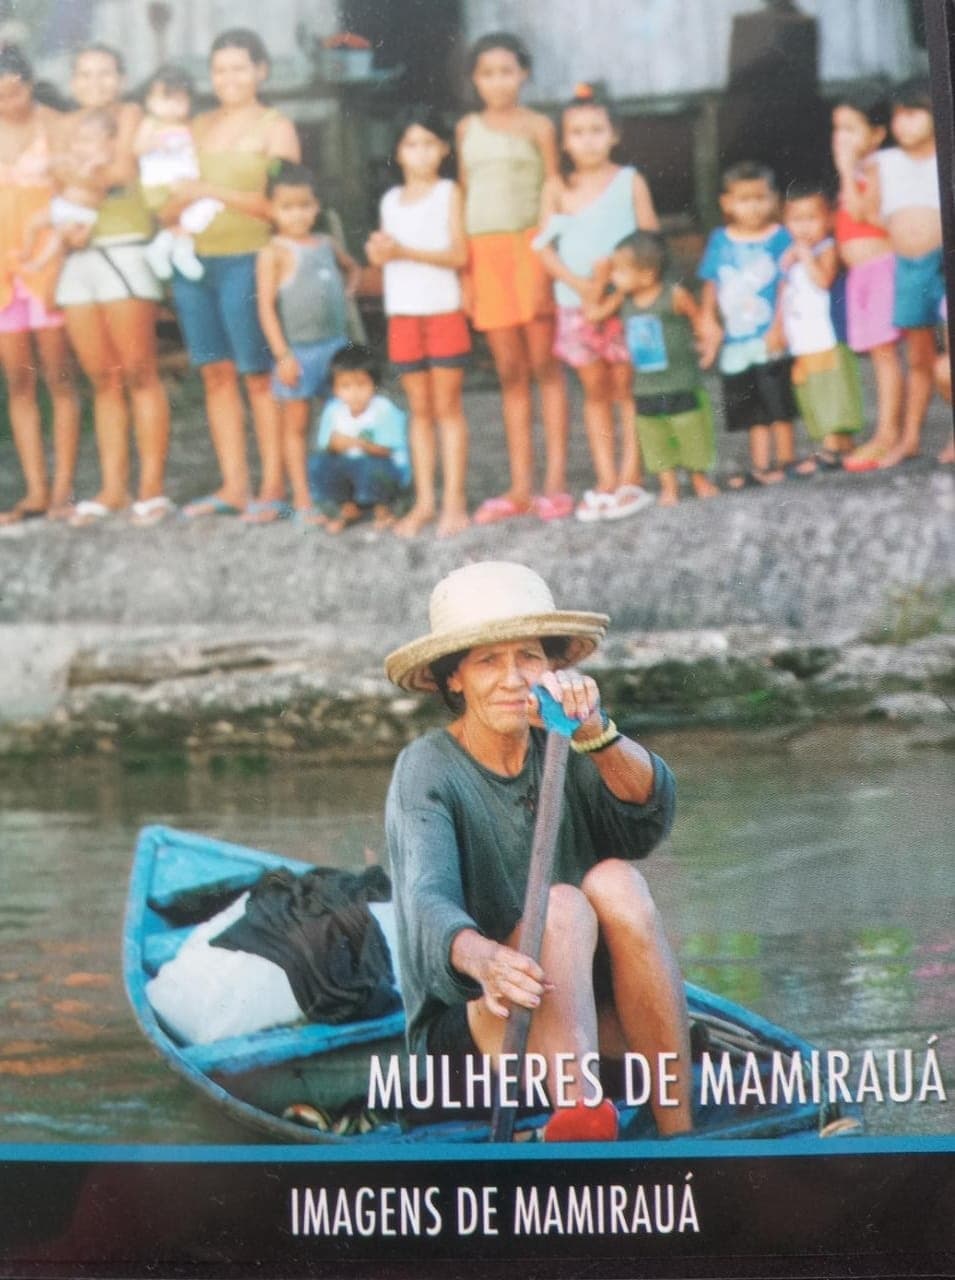 Mulheres de Mamirauá